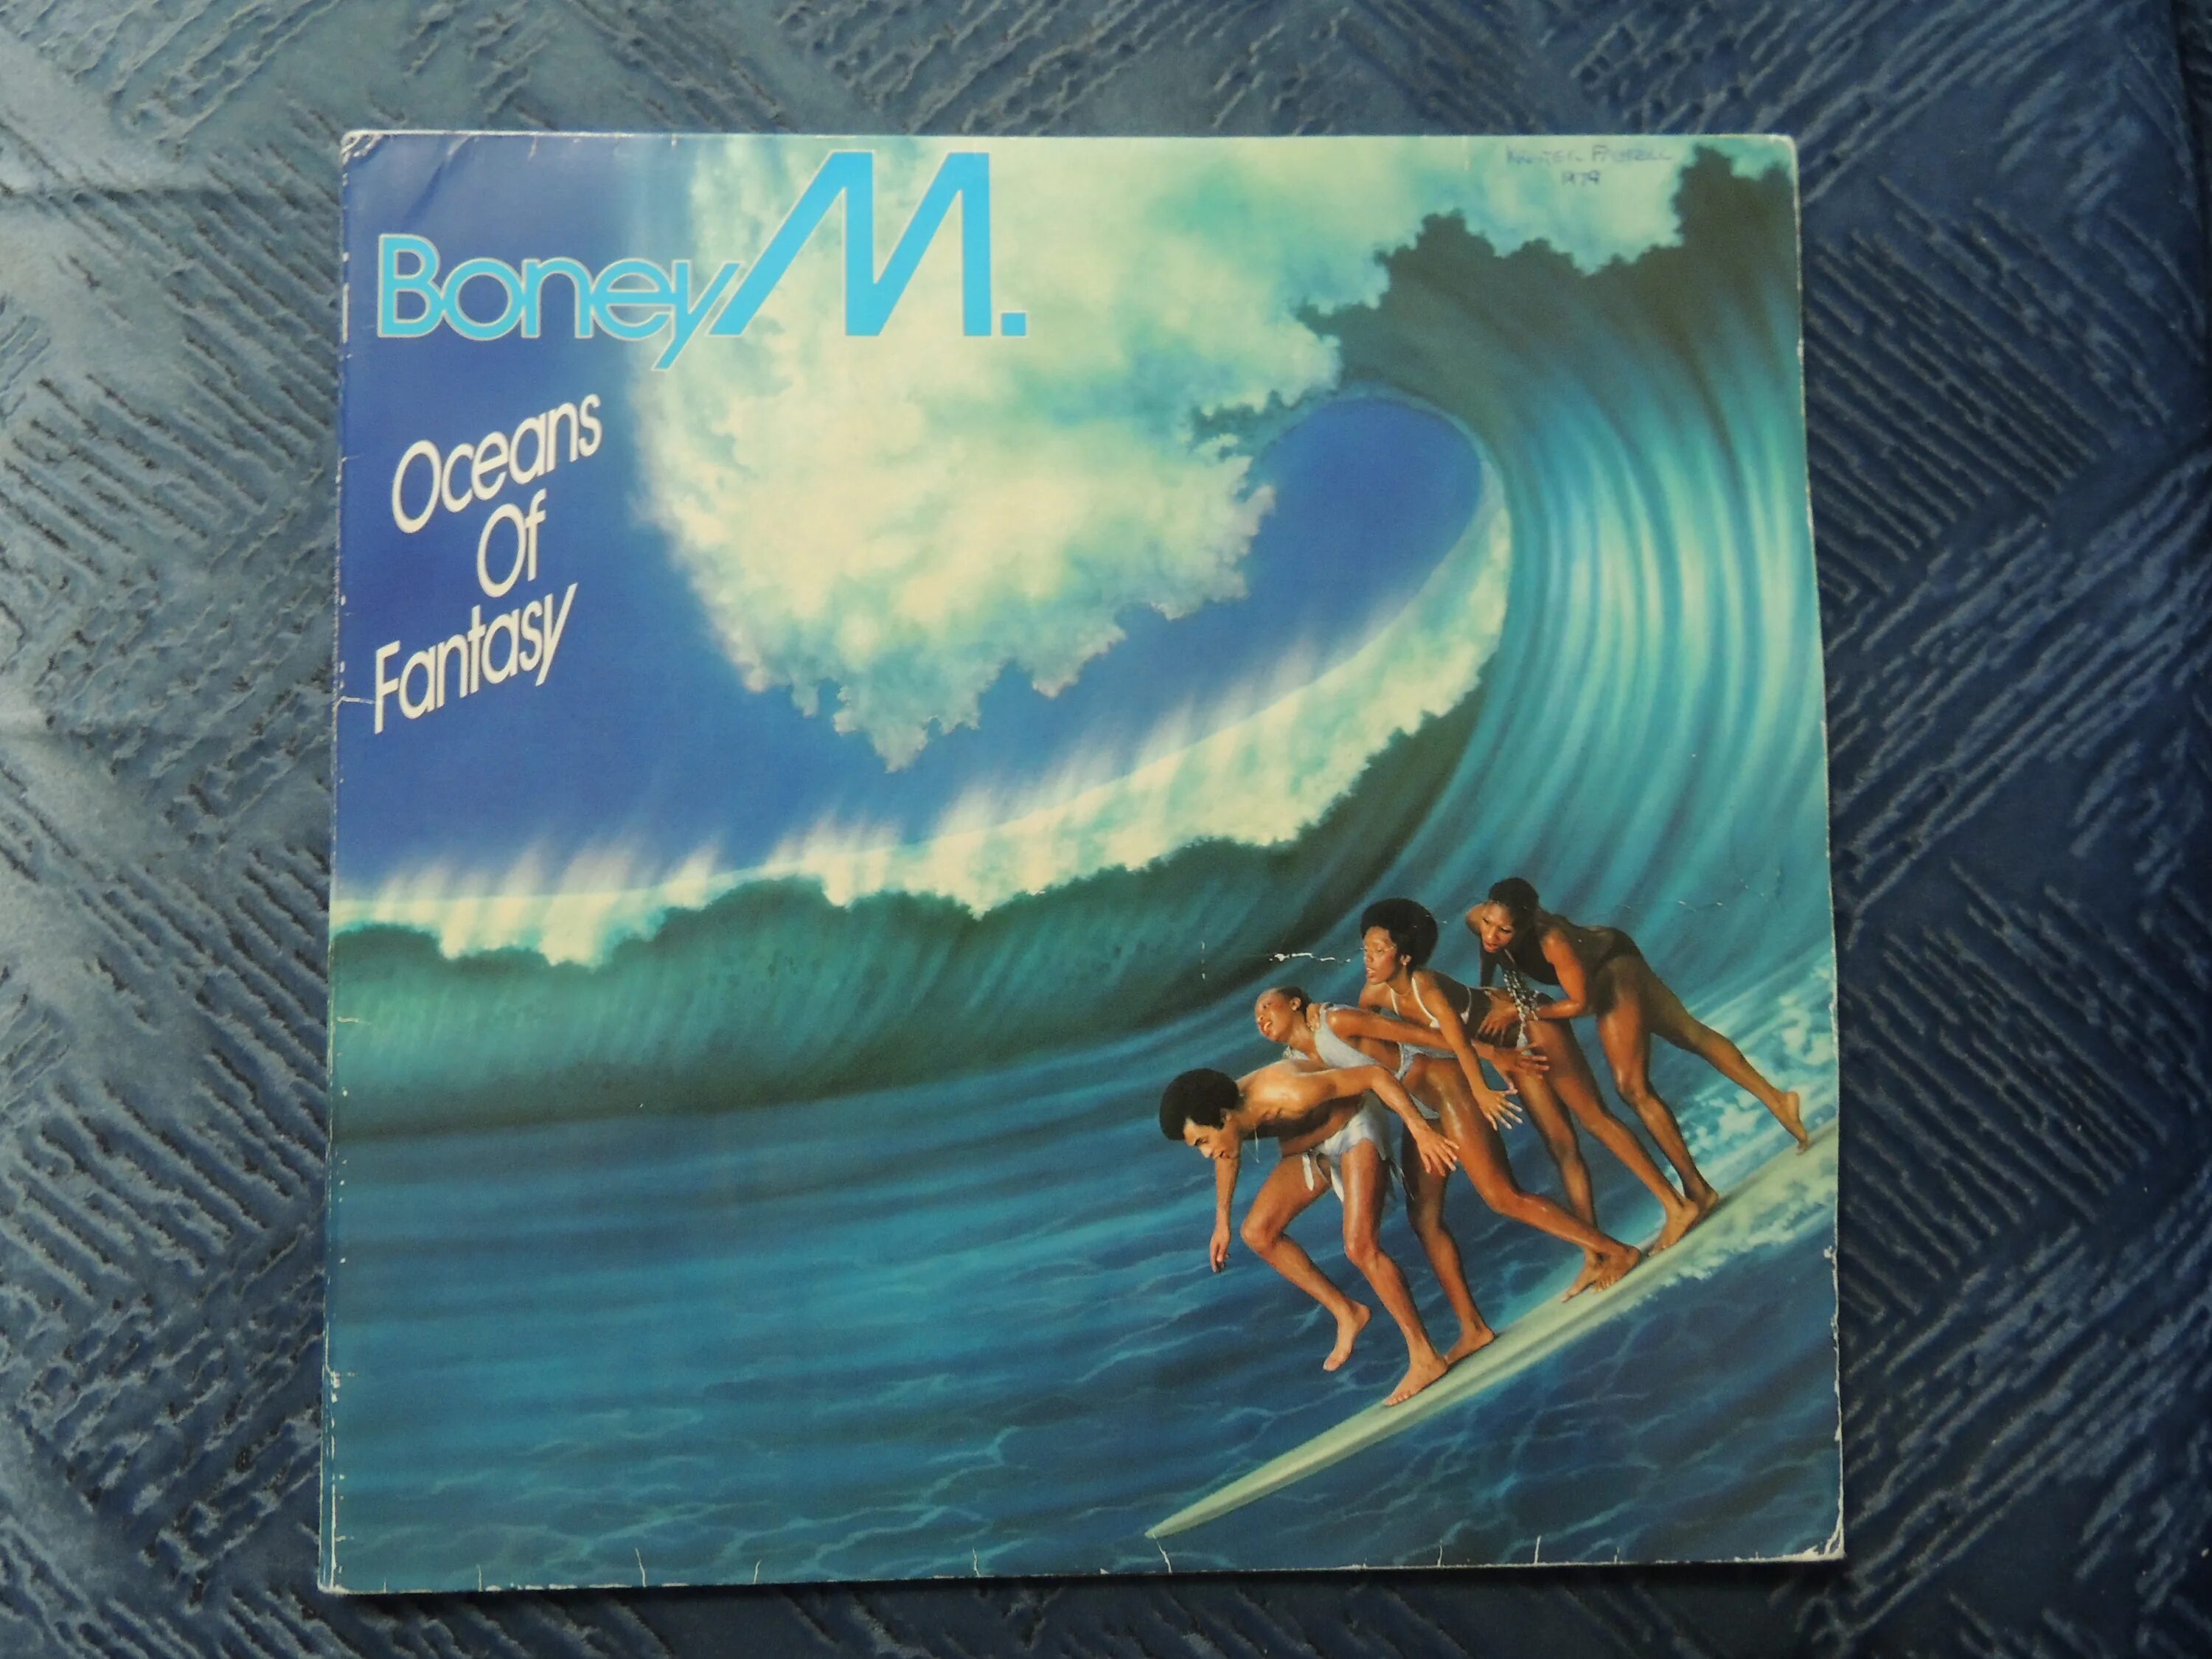 Boney m Oceans of Fantasy 1979 пластинка. Boney m Oceans of Fantasy 1979 LP. Альбомы Boney m - (Oceans of Fantasy) - 1979г. Boney m Oceans of Fantasy обложка. Boney m oceans